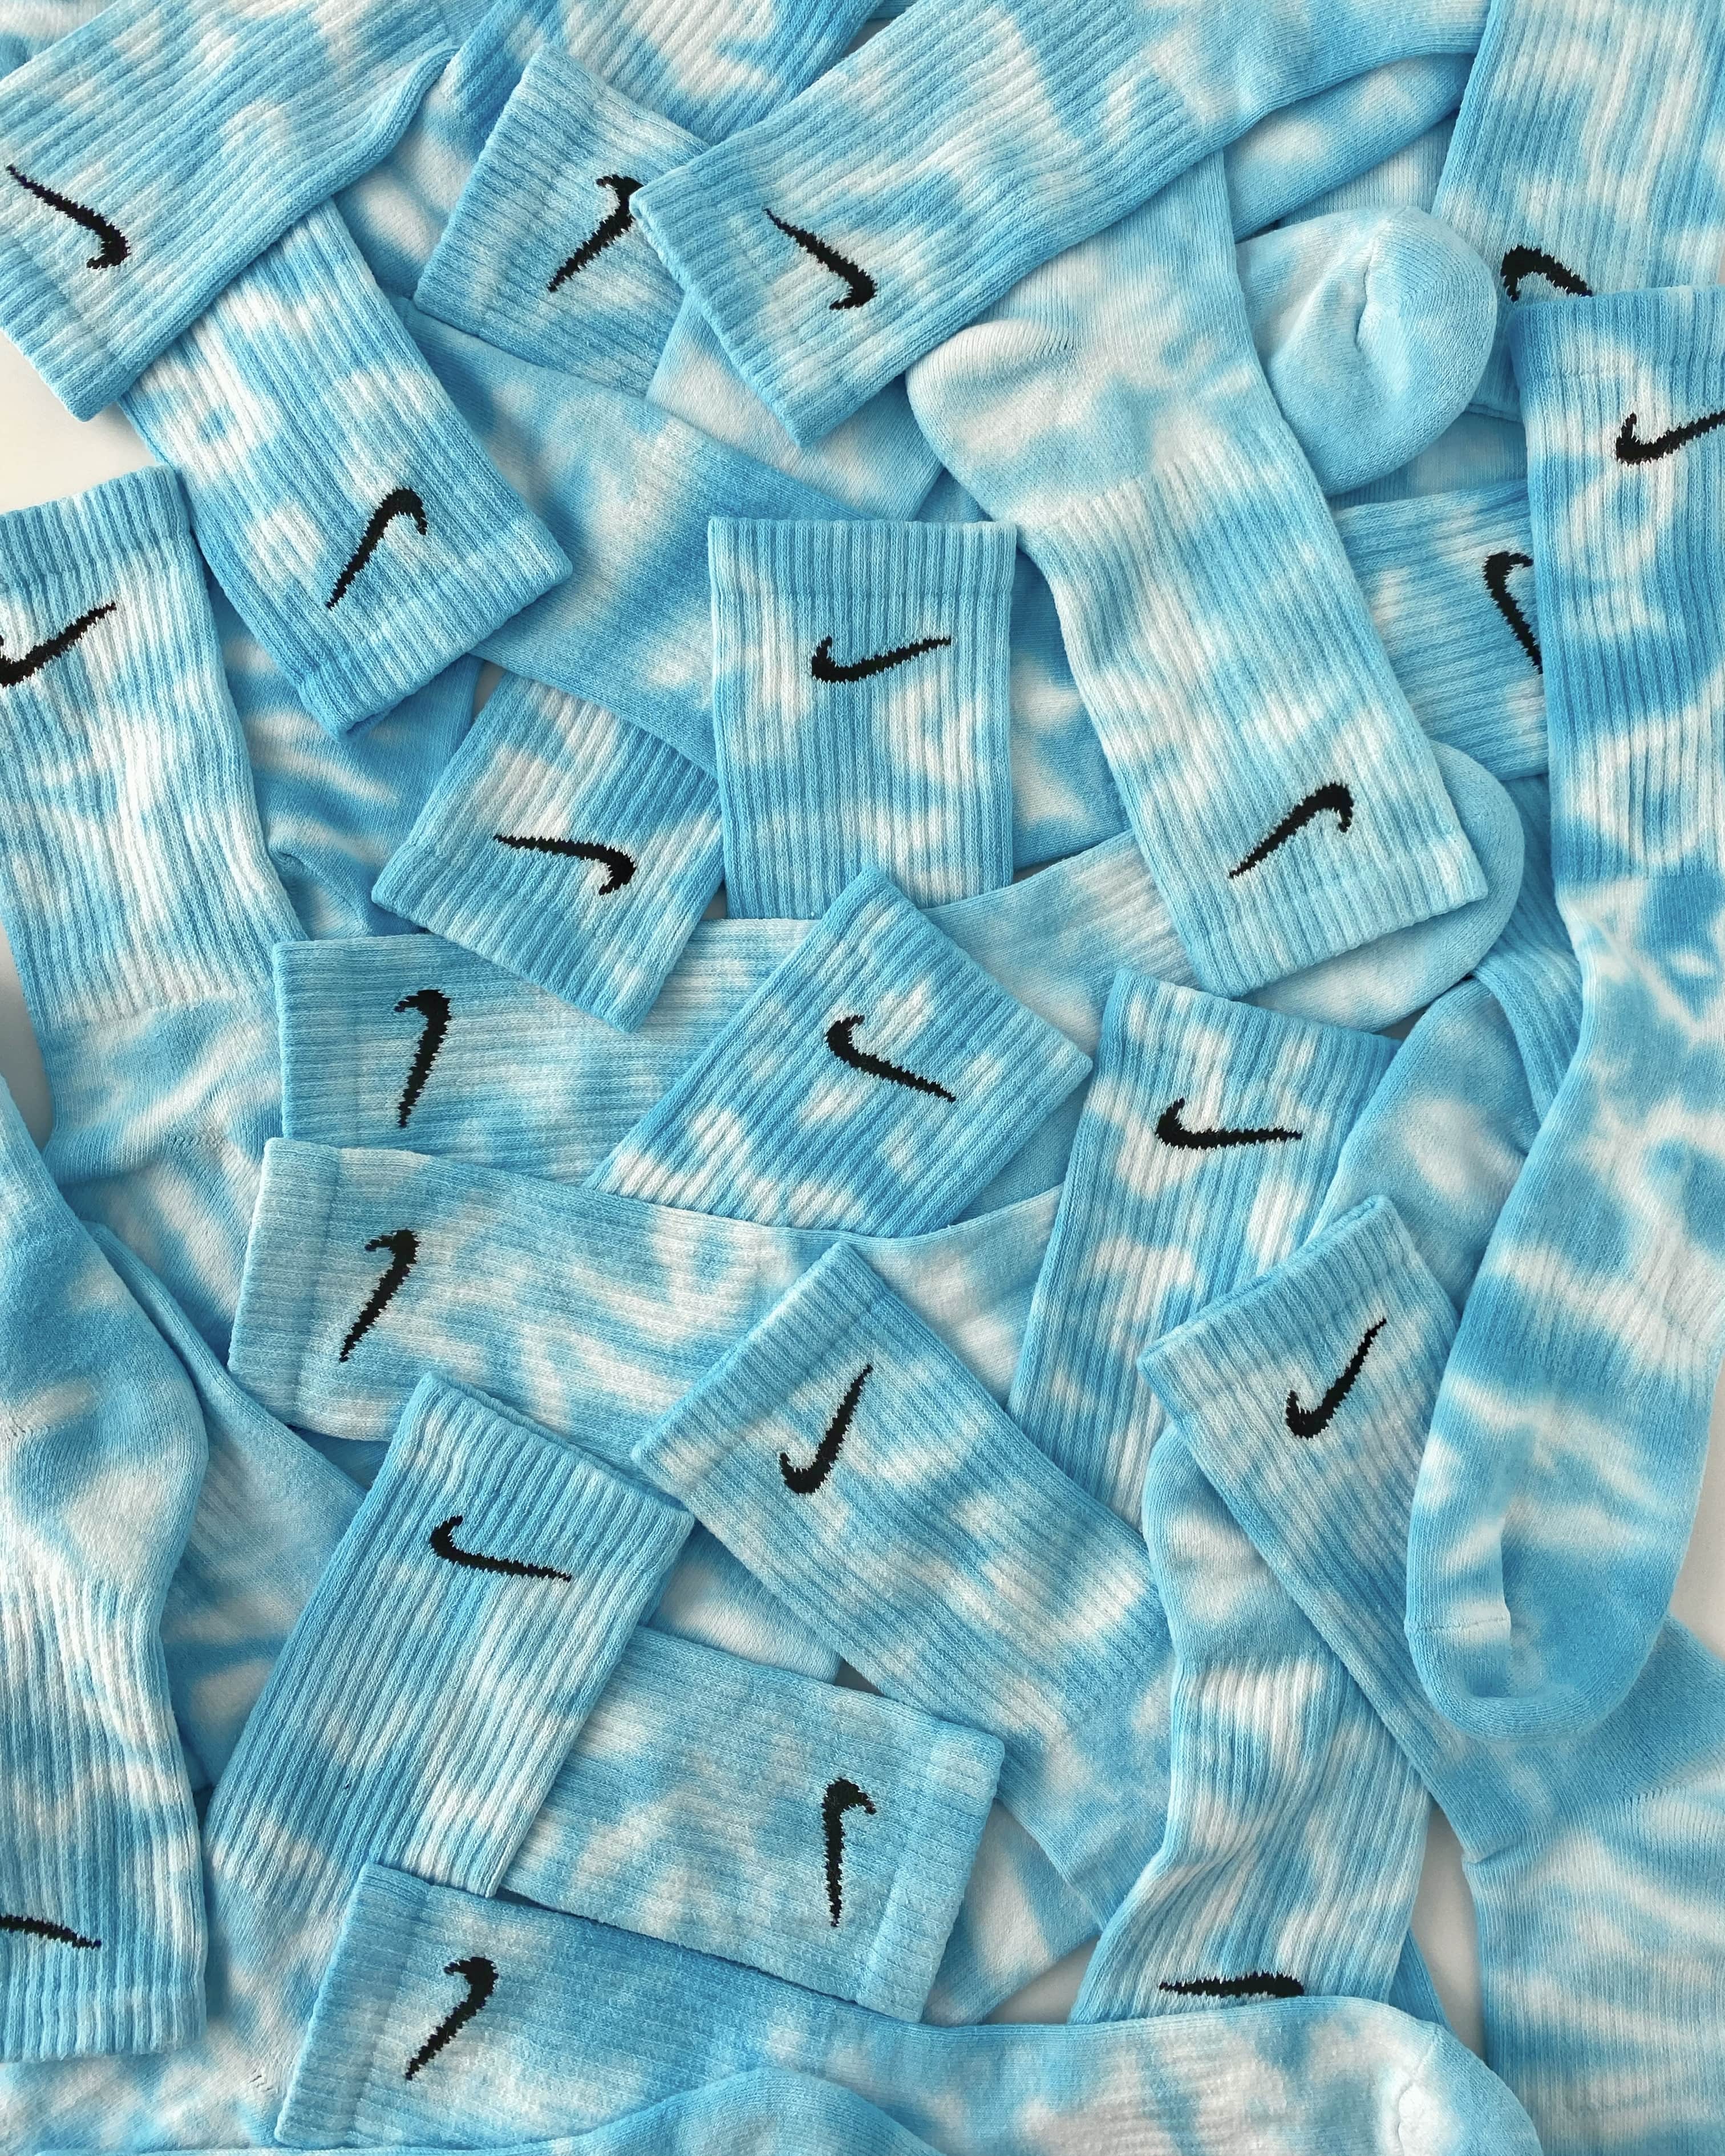 Blue Ocean - Tie Dye Nike Socks